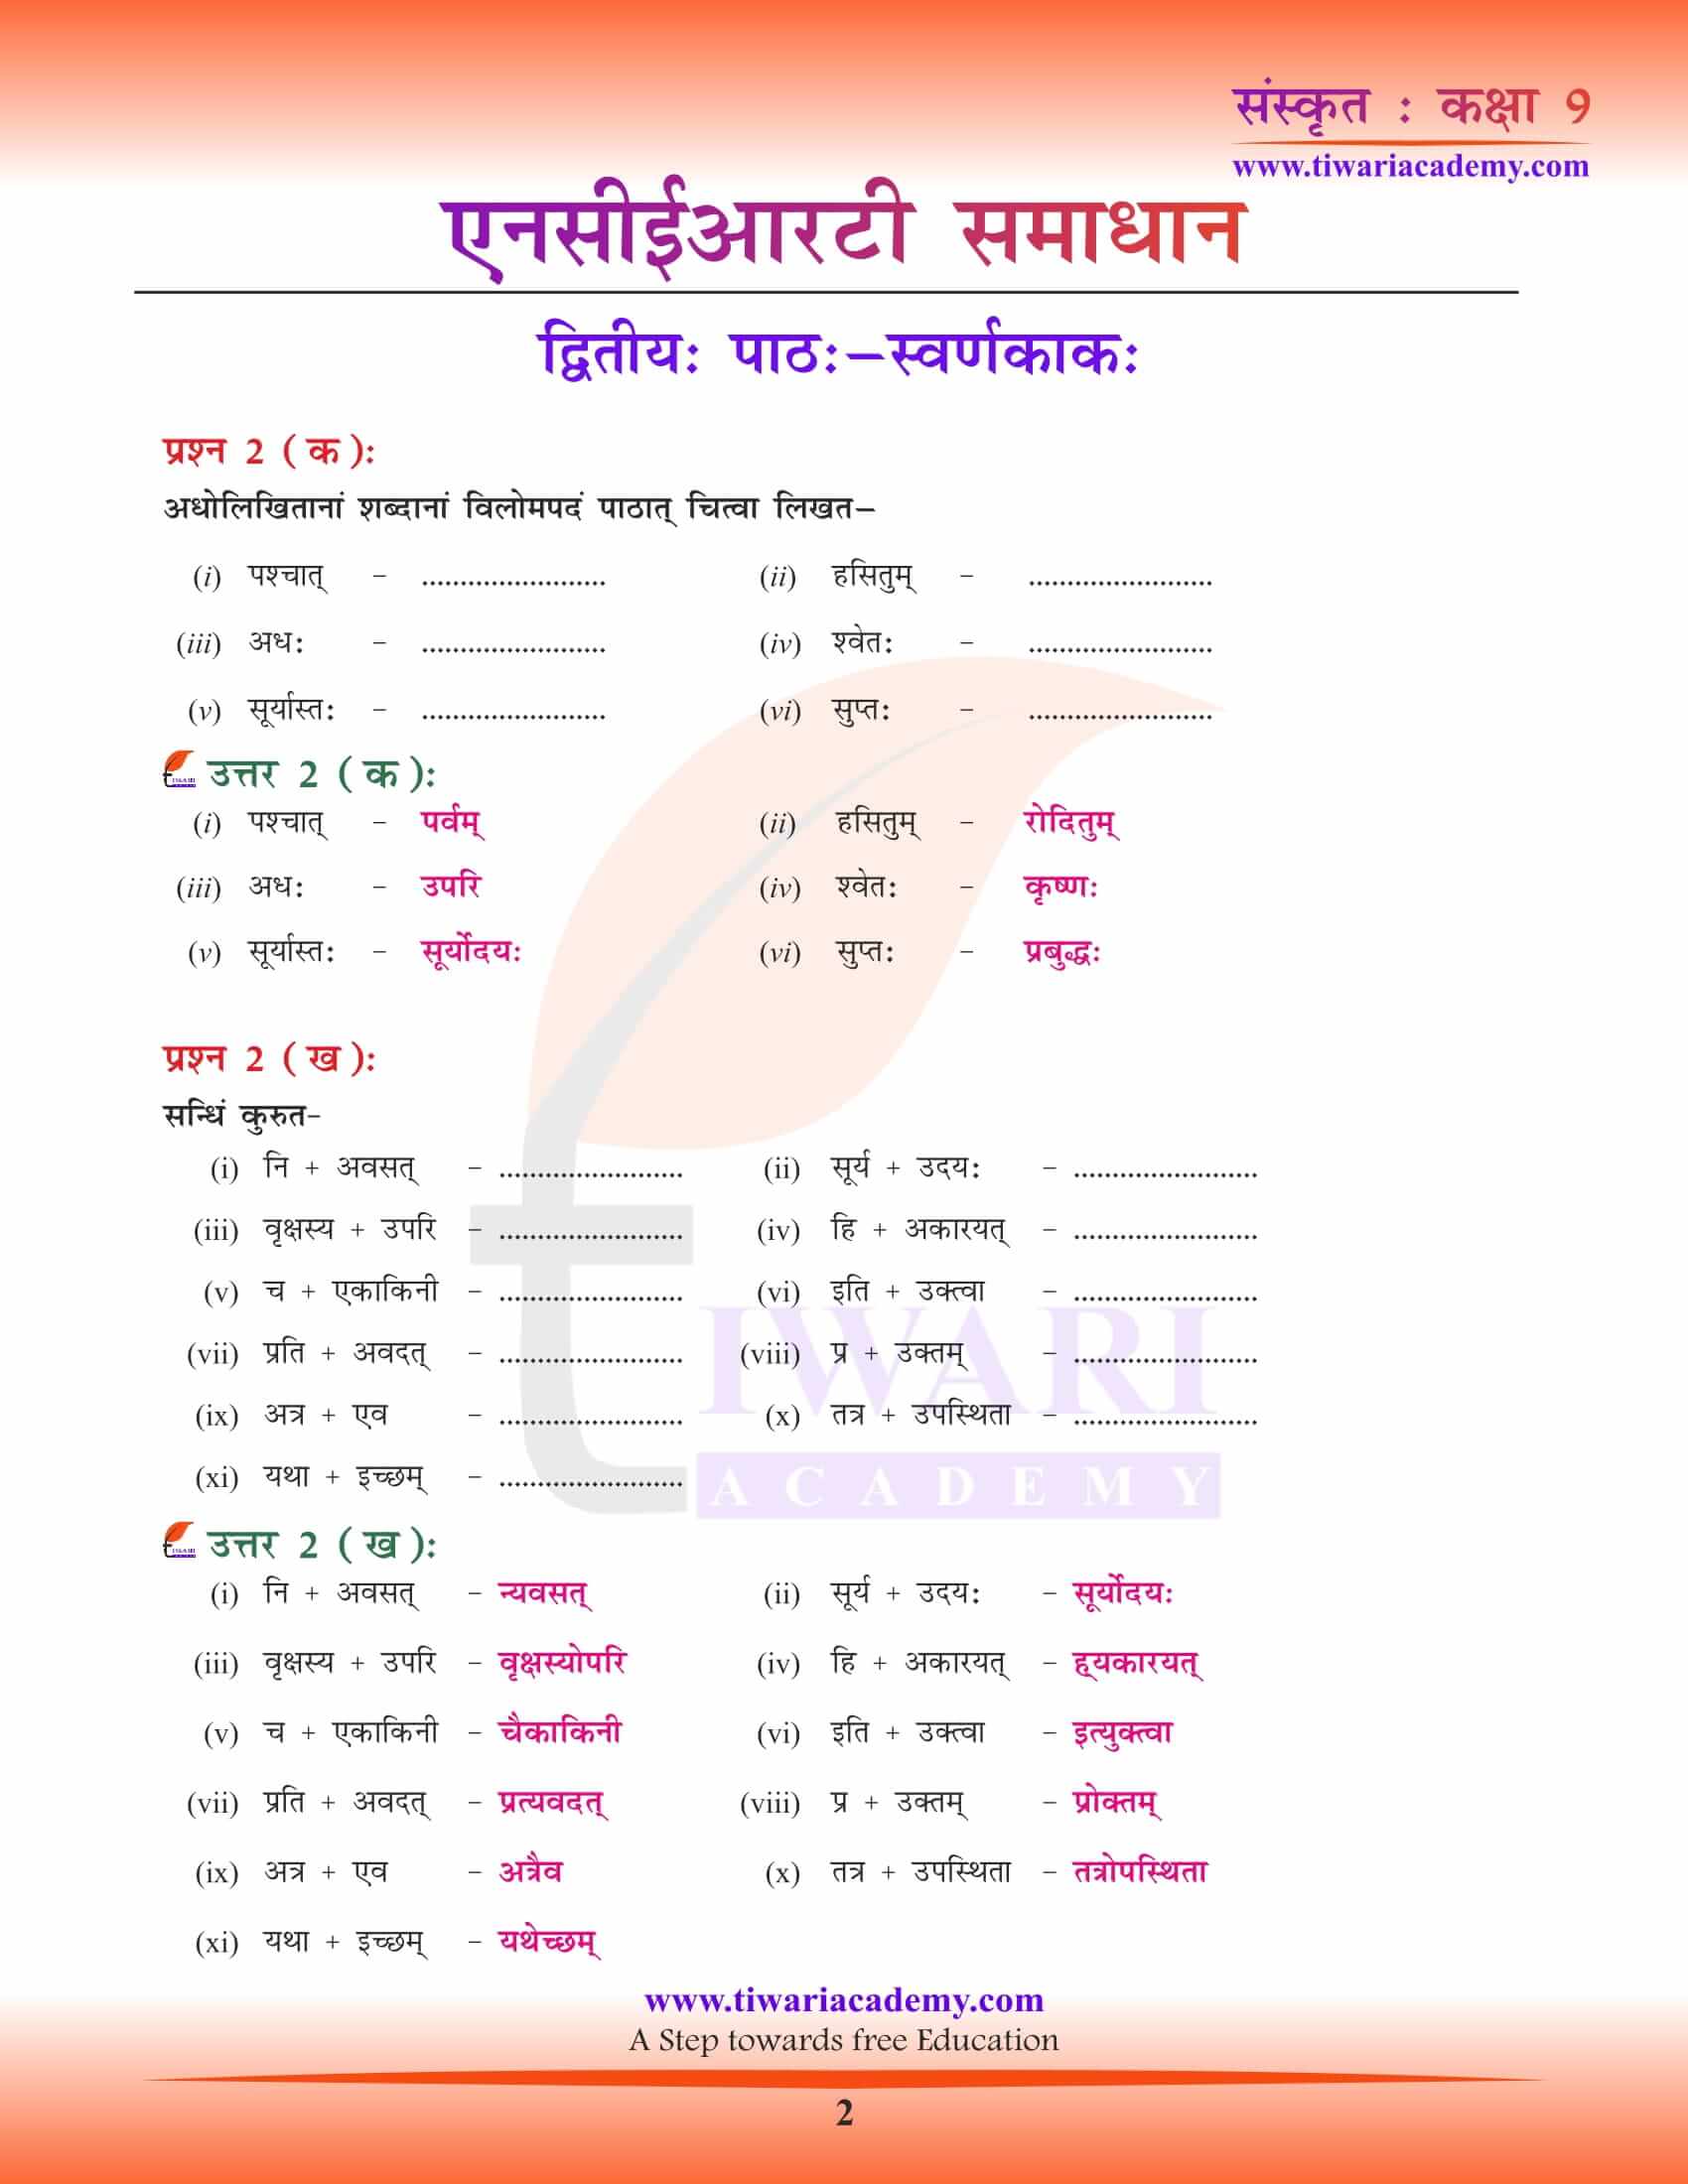 NCERT Solutions for Class 9 Sanskrit Adhyaay 2. Swarnkakah